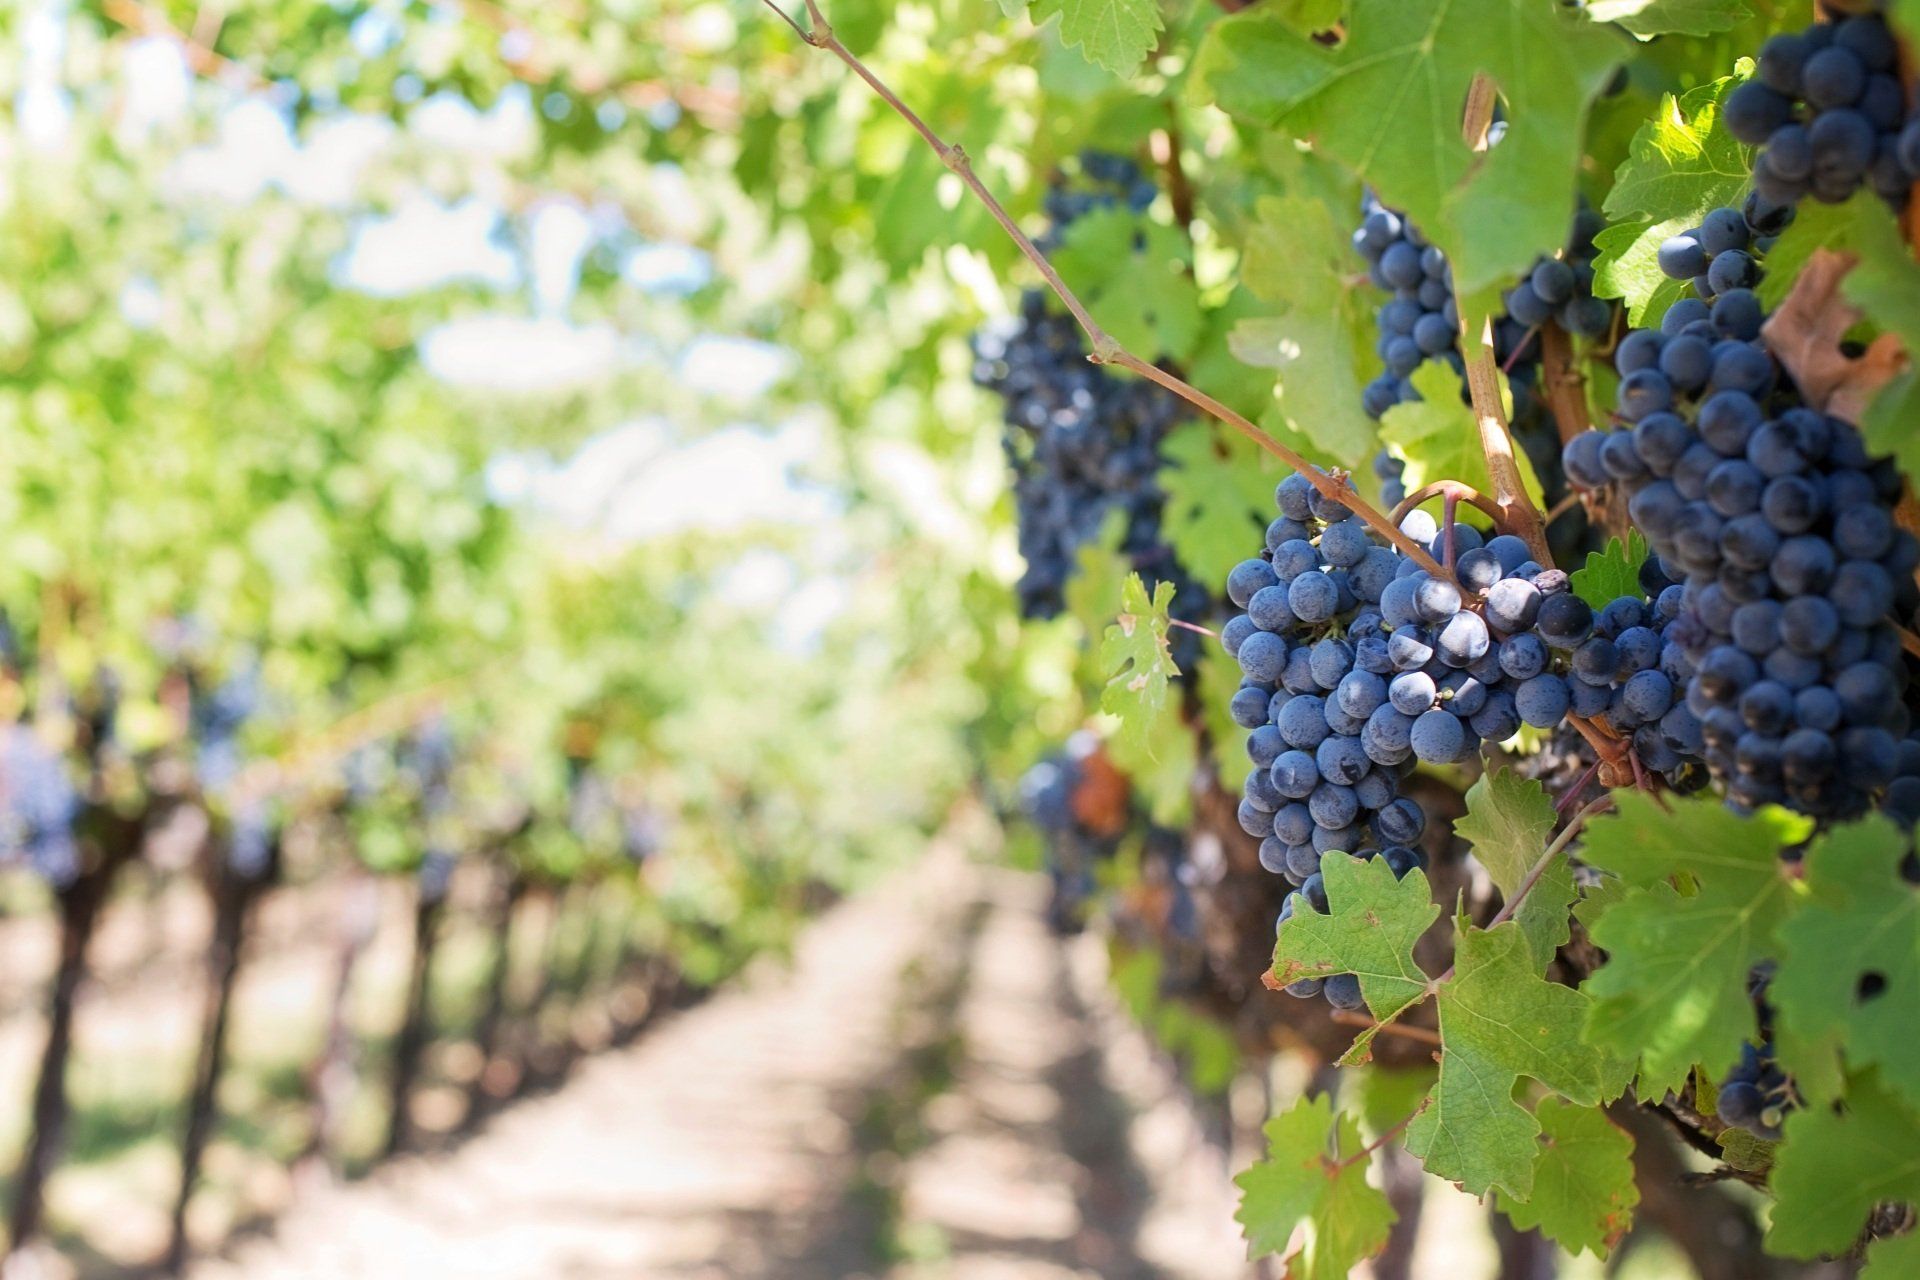 Bulk Bins for the wine industry